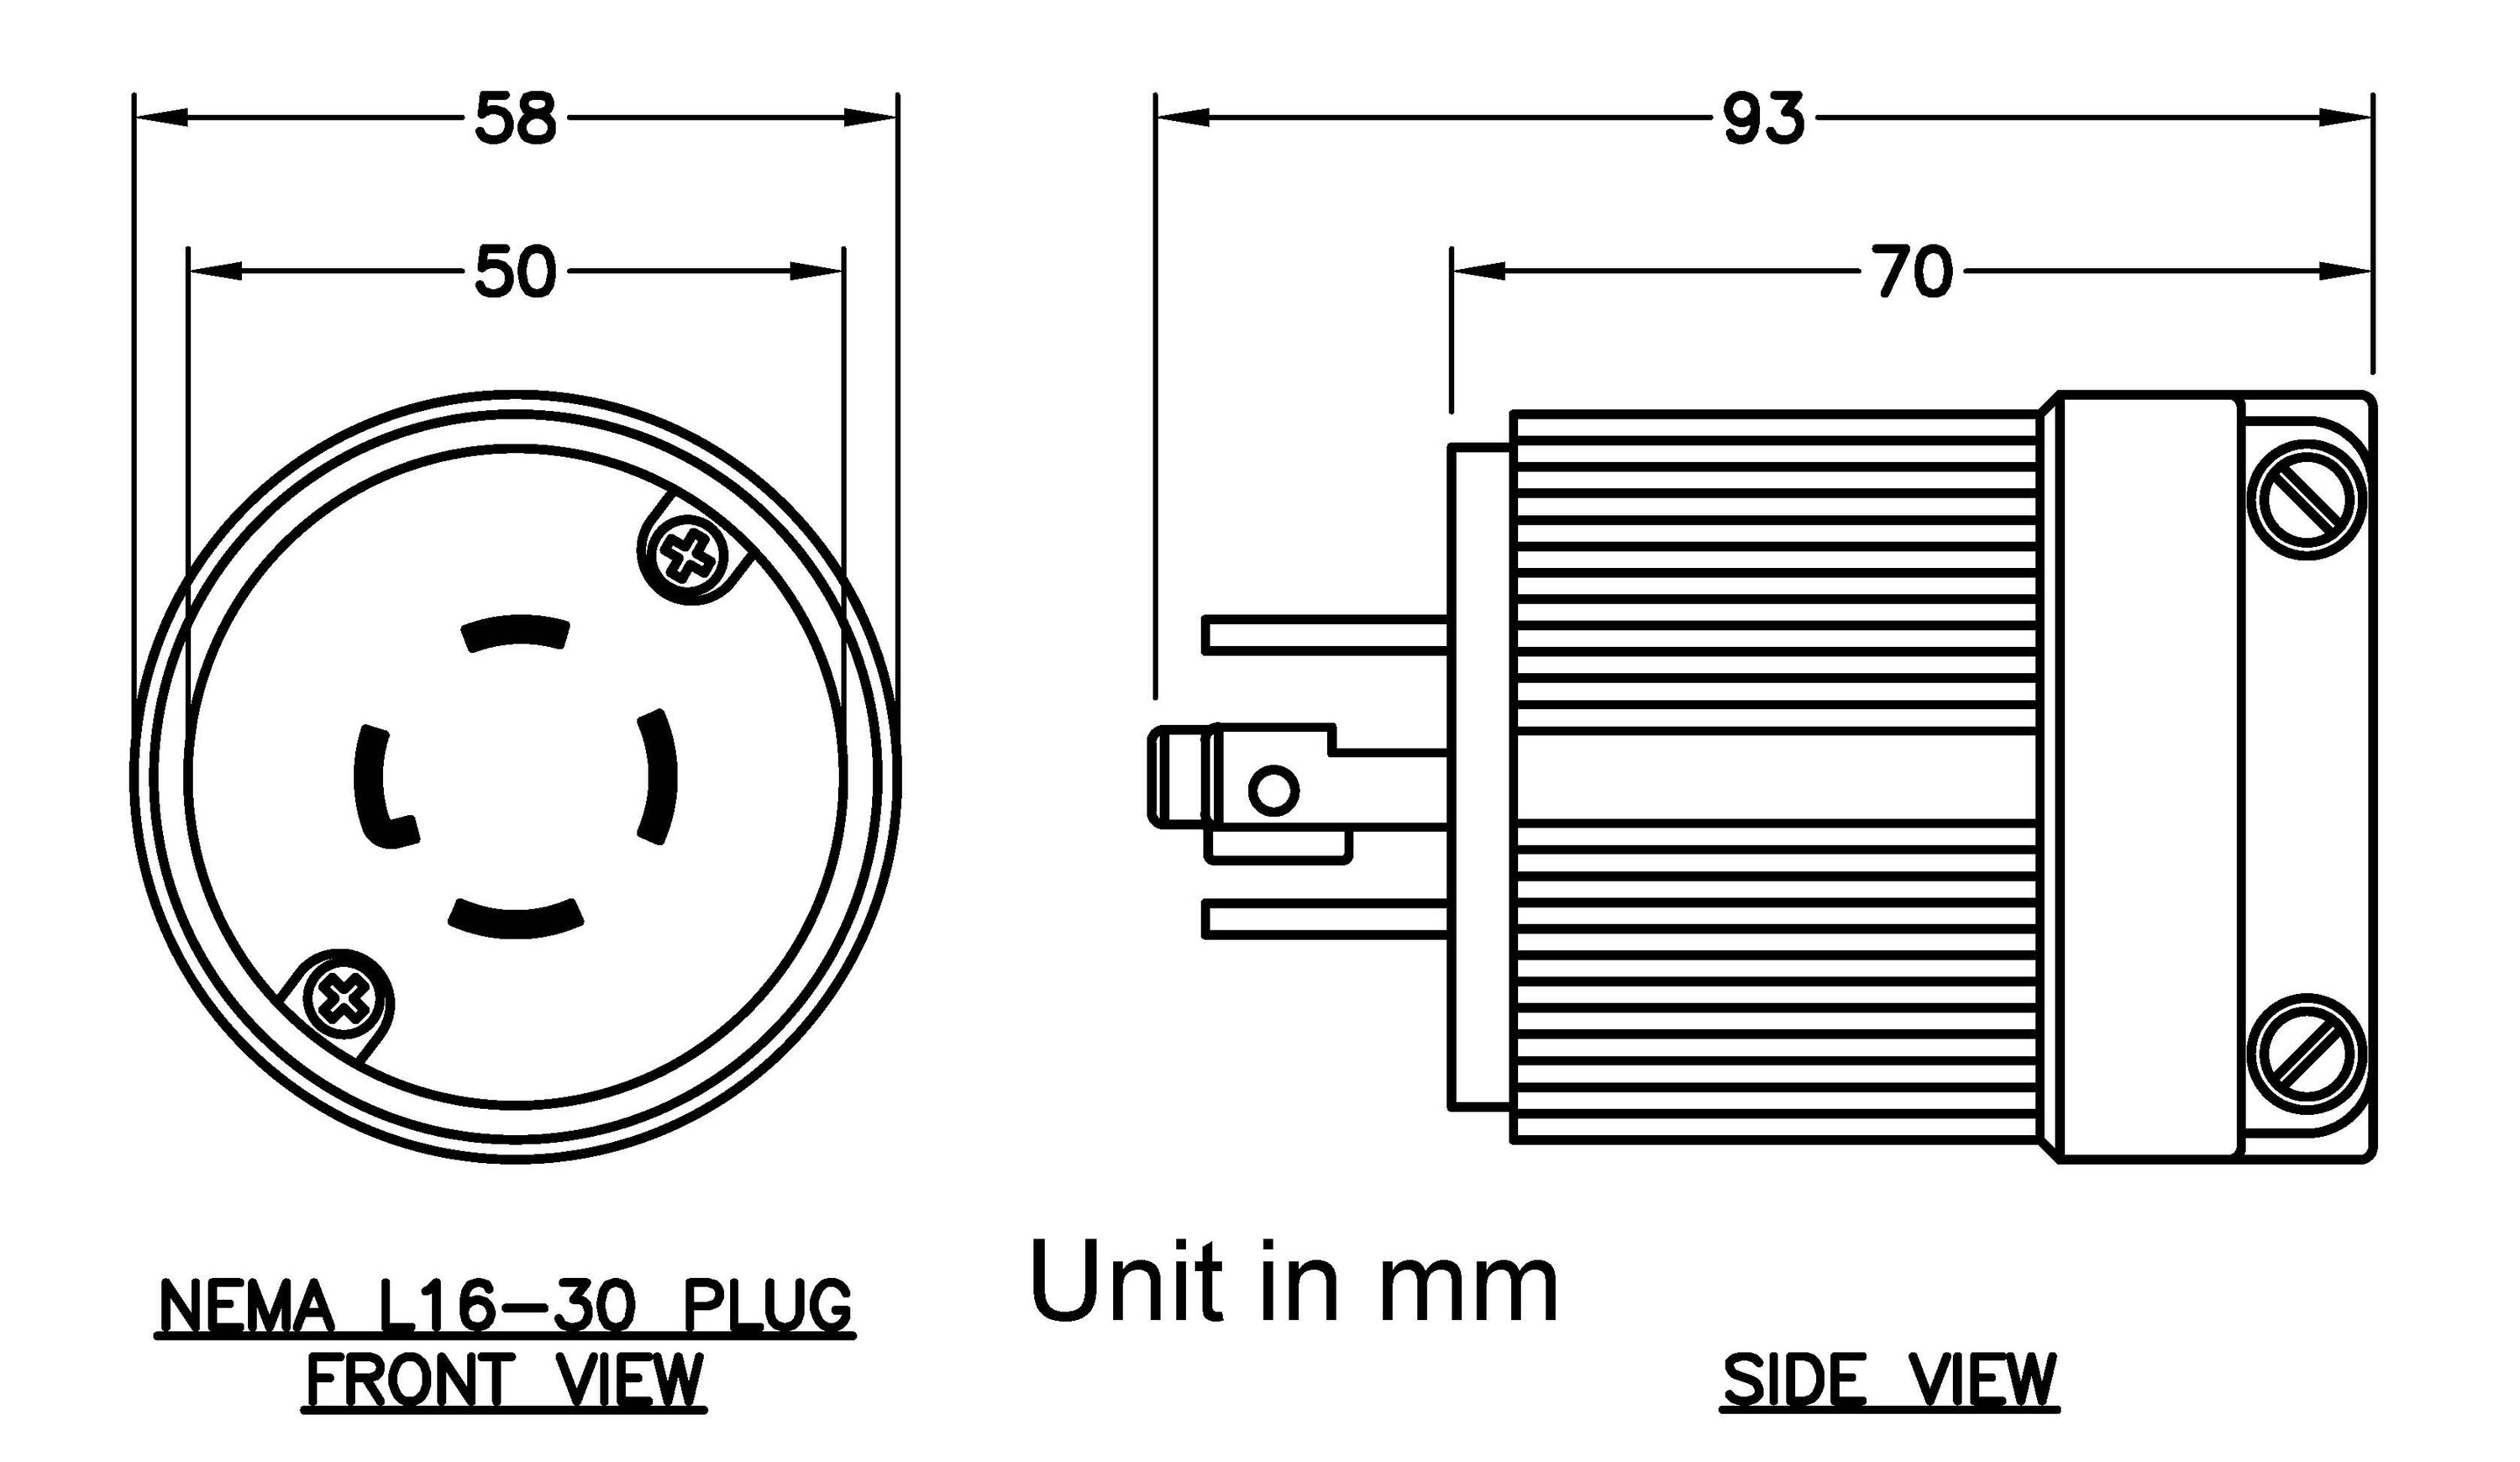 L16-30P, 480V AC, Locking Plug - 6A659